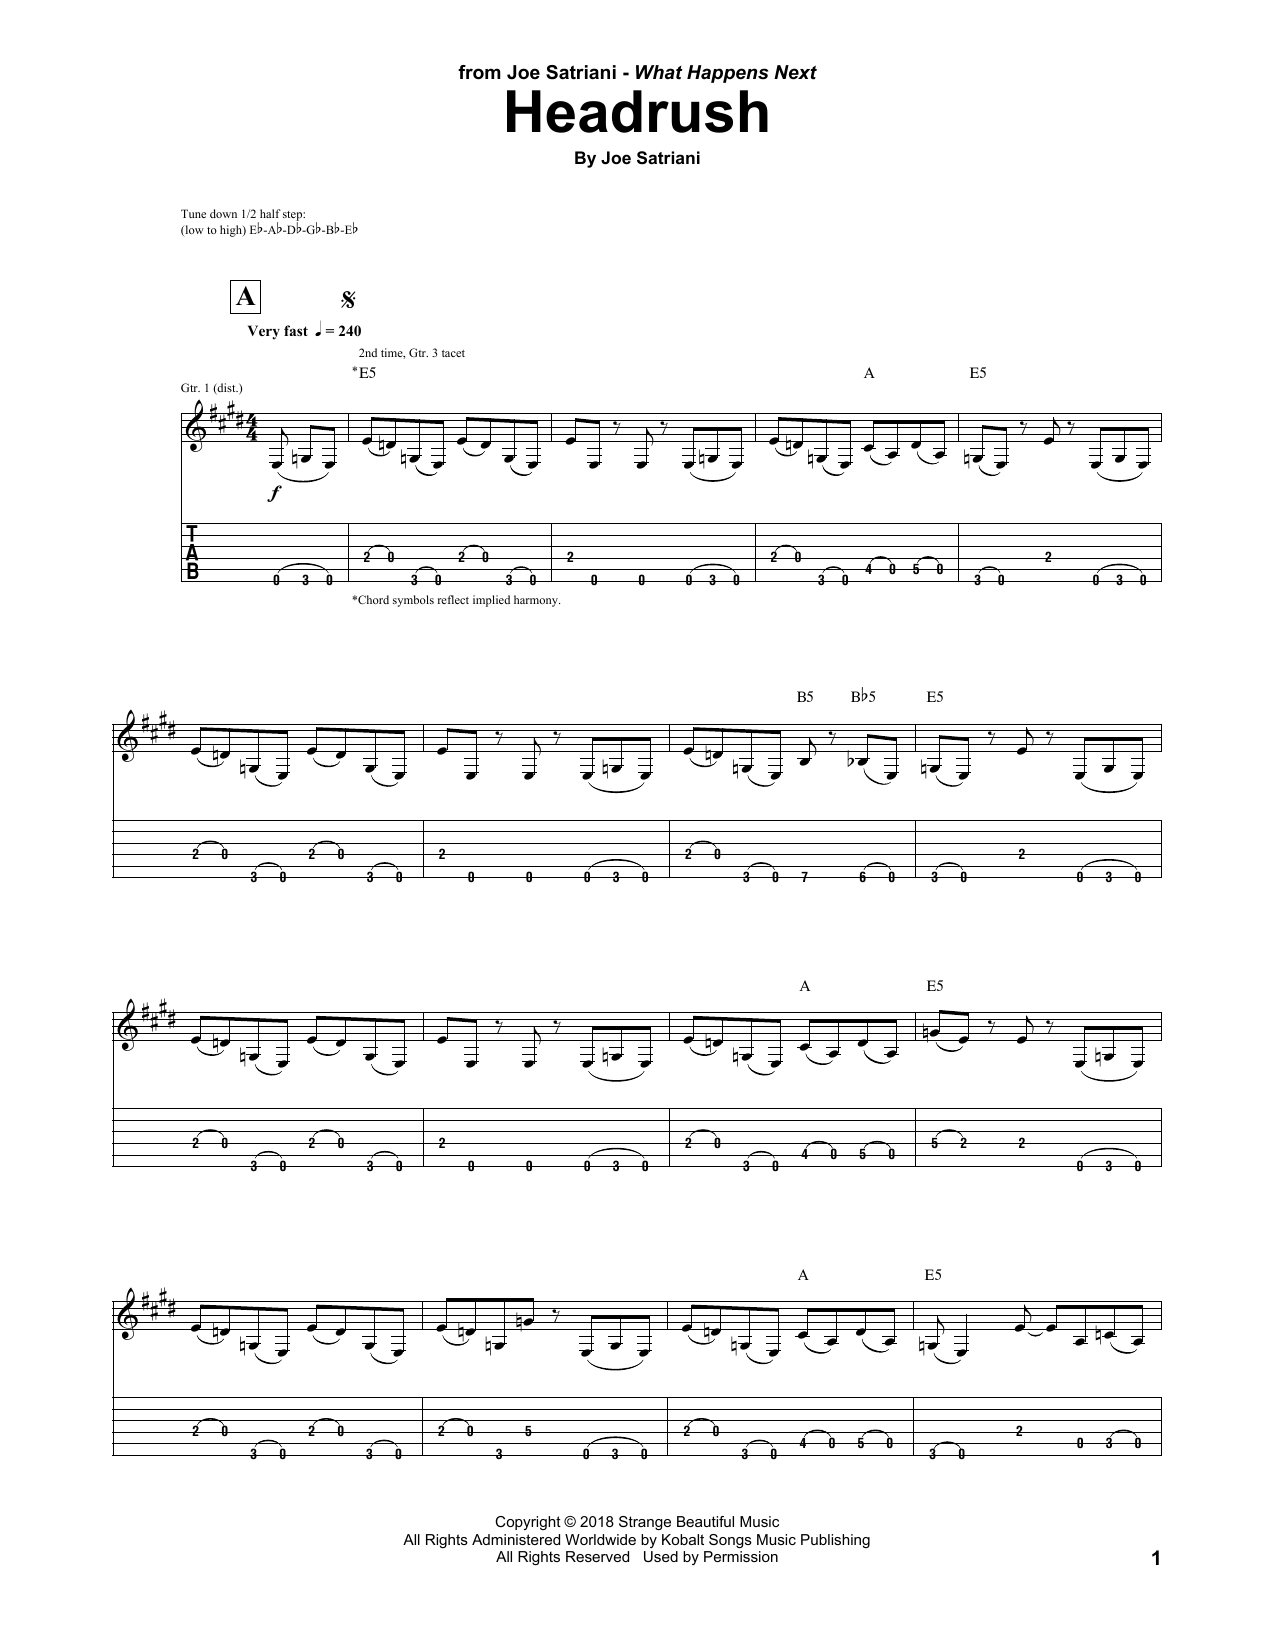 Joe Satriani Headrush Sheet Music Notes & Chords for Guitar Tab - Download or Print PDF